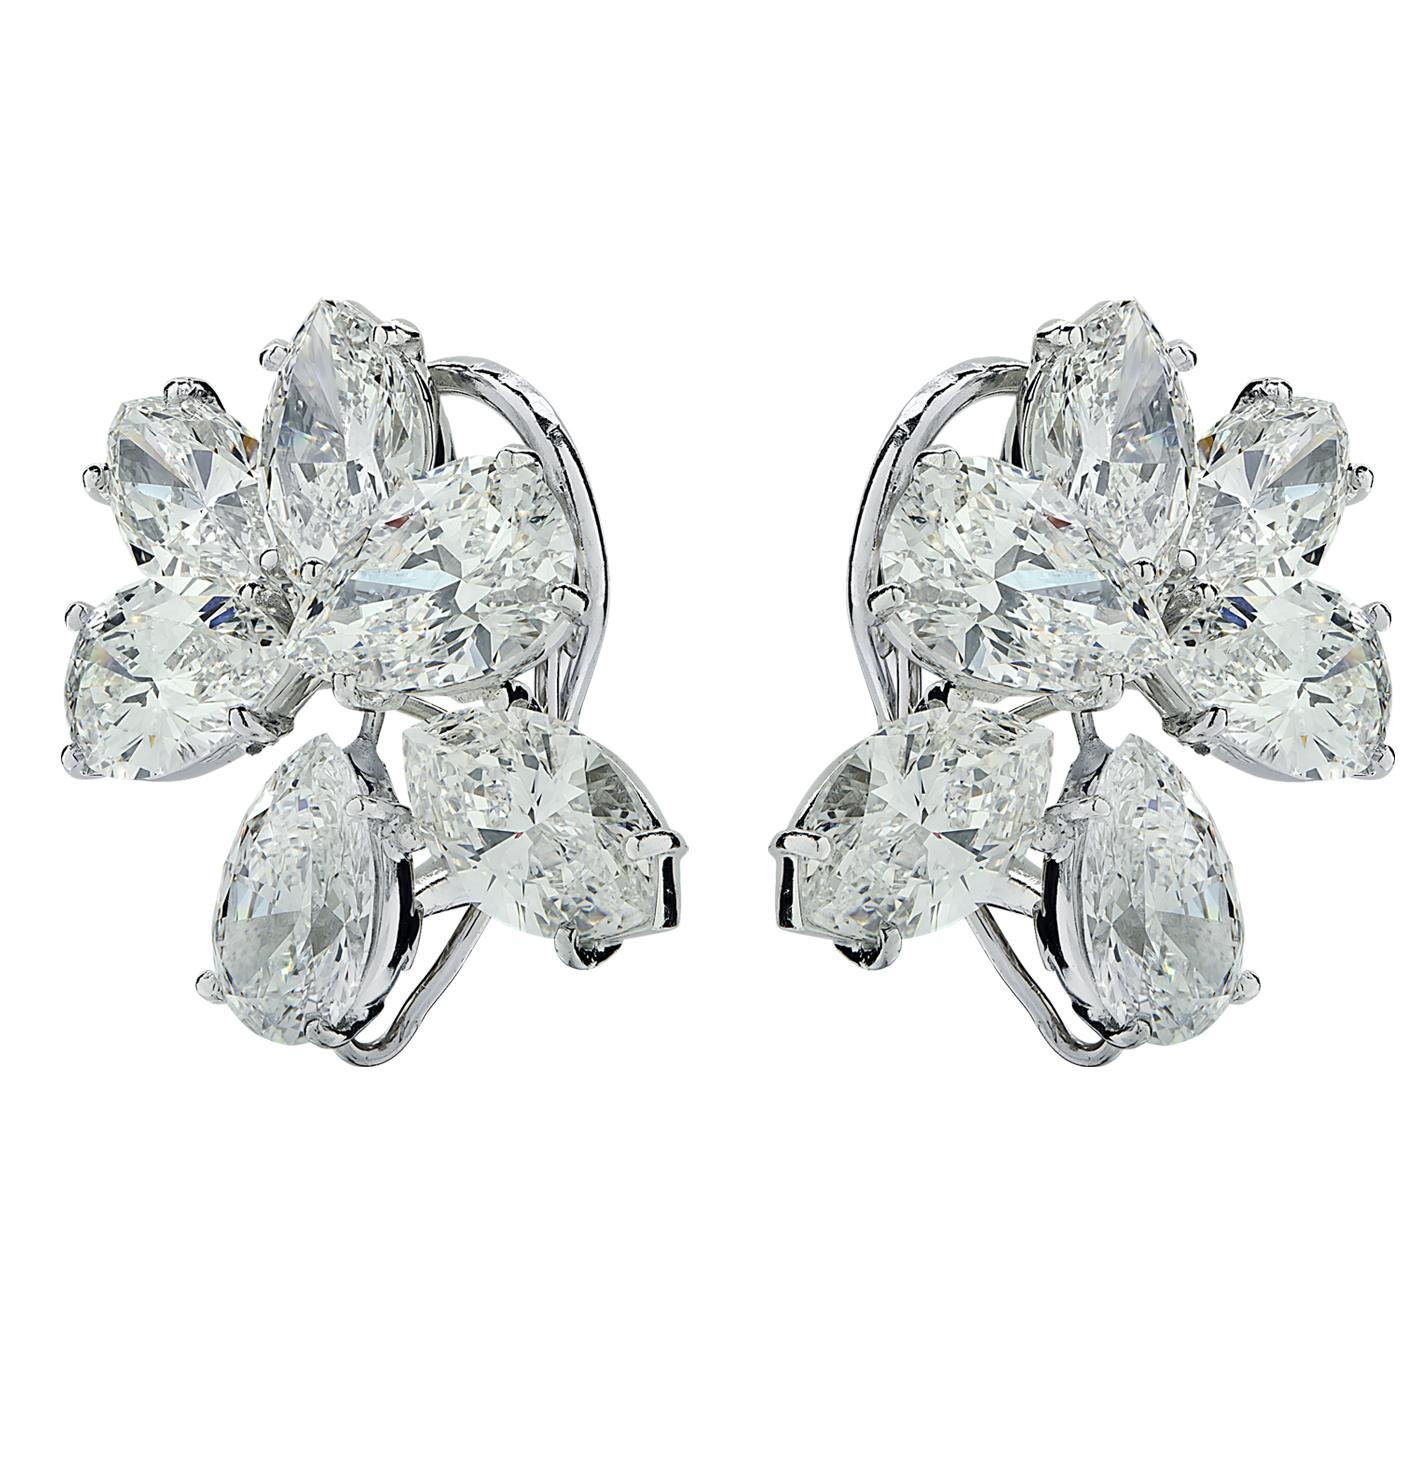 Modern Vivid Diamonds 15.02 Carat Diamond Flower Cluster Earrings